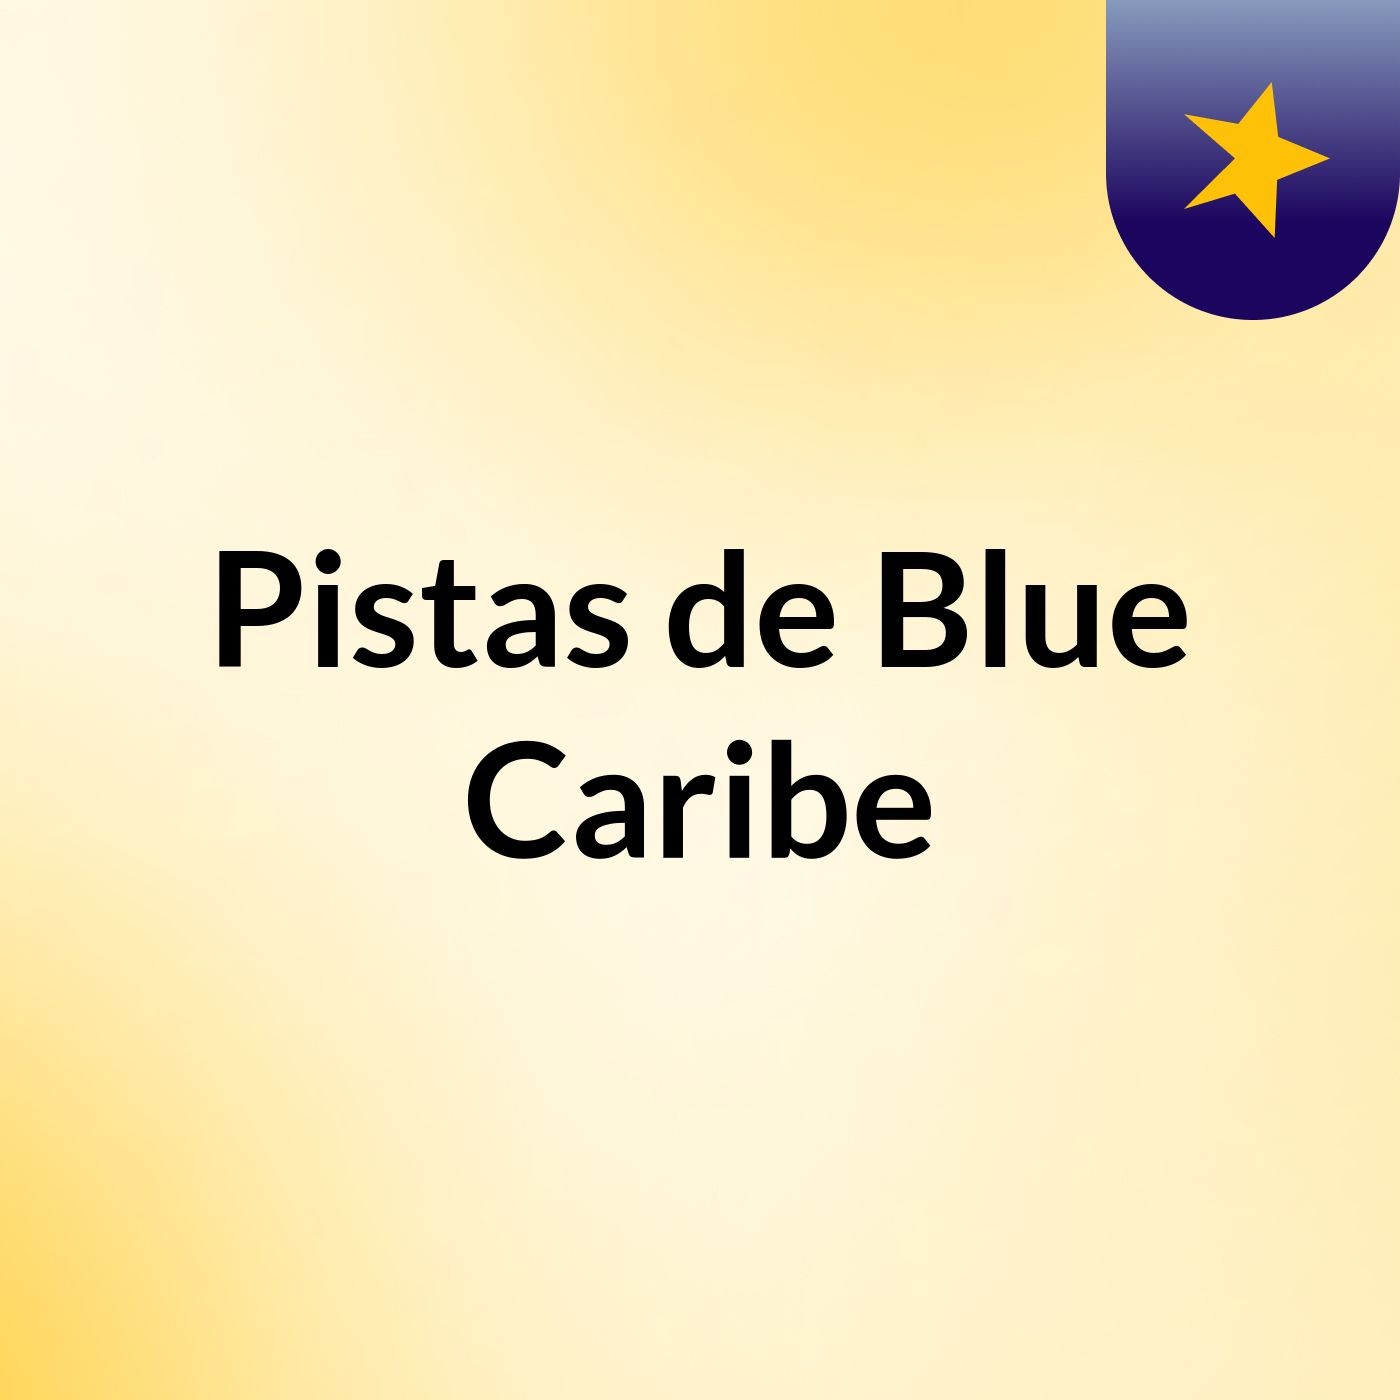 Pistas de Blue Caribe